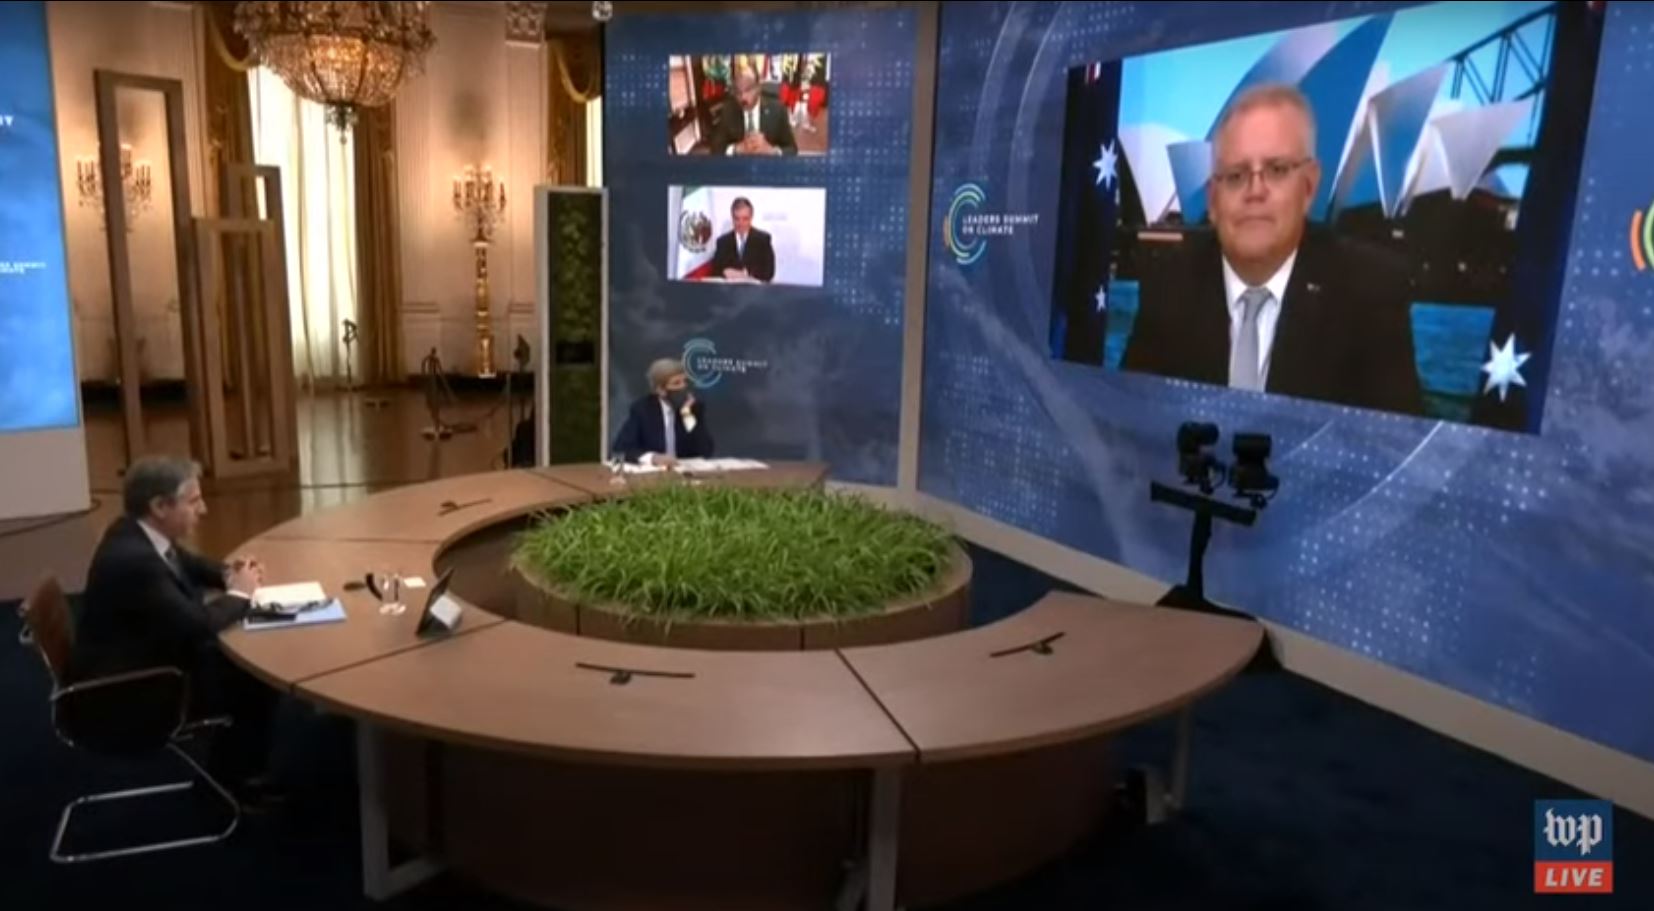 PM Scott Morrison speaks at the 2021 Virtual Climate Summit. Credit: Washington Post on YouTube